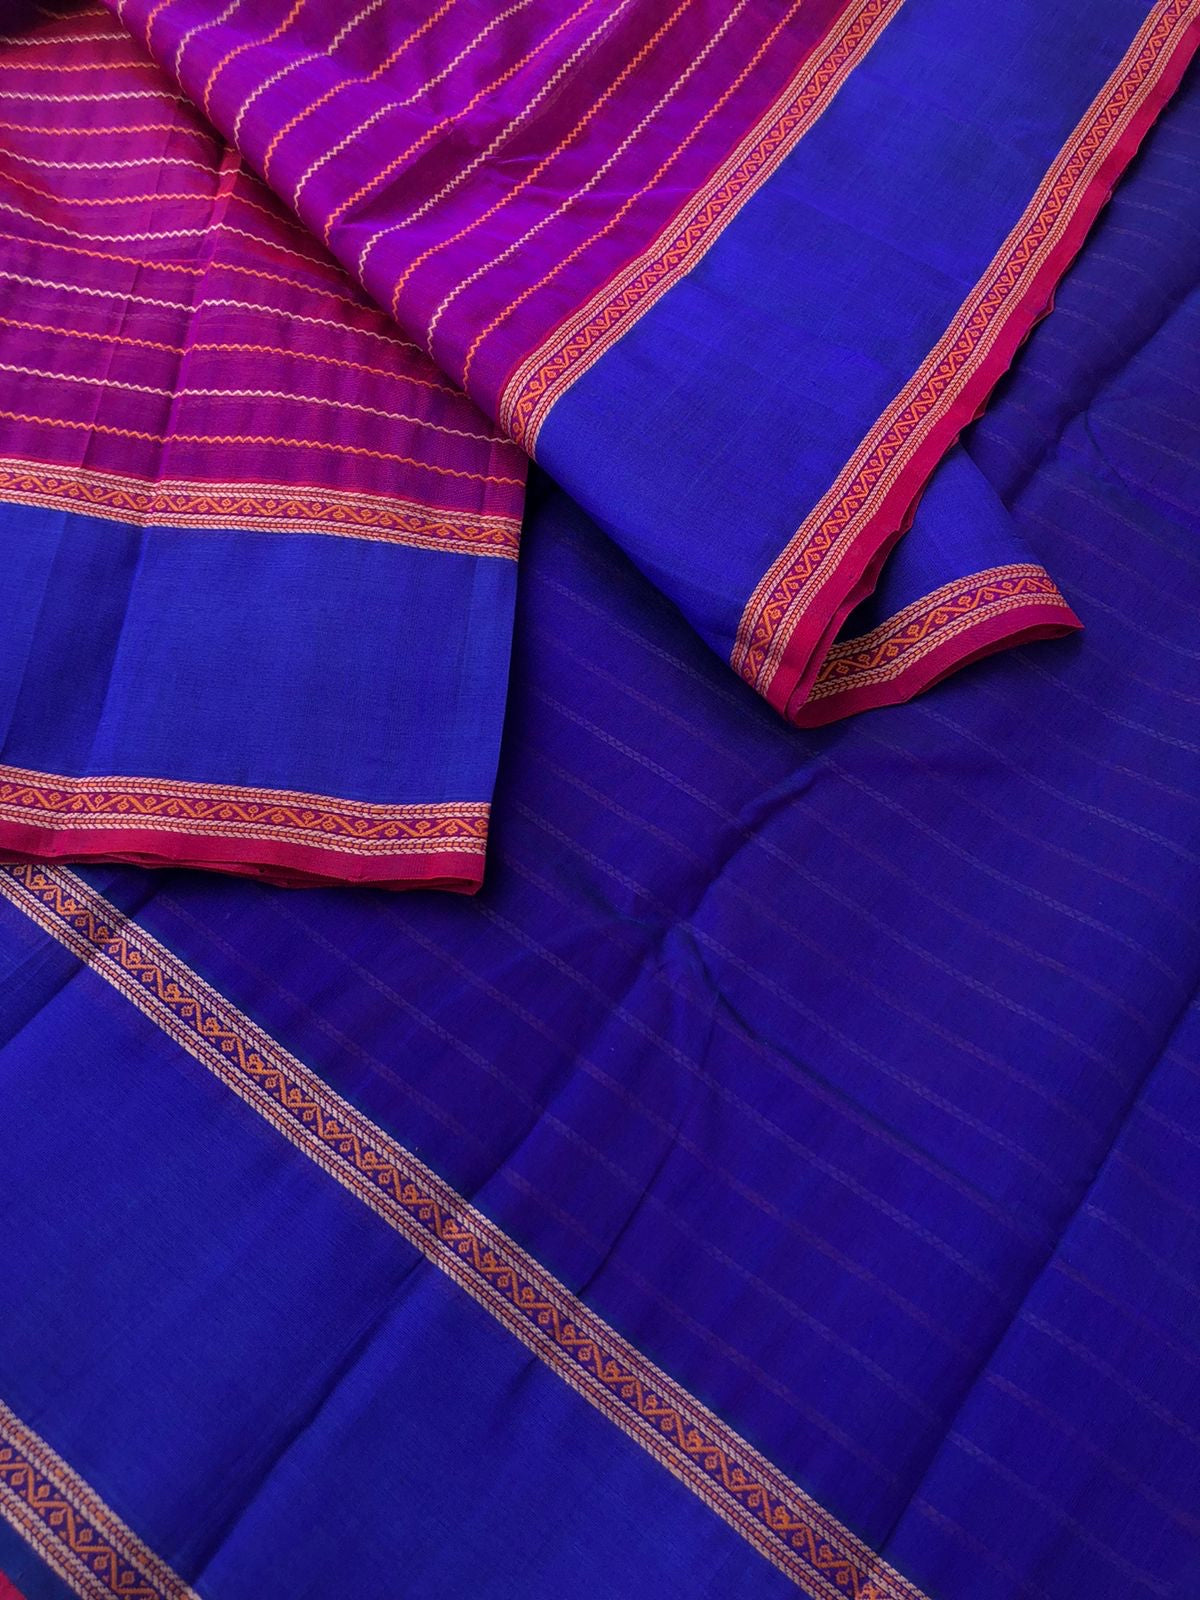 Woven Motifs Silk Cotton - deepest purple veldhari